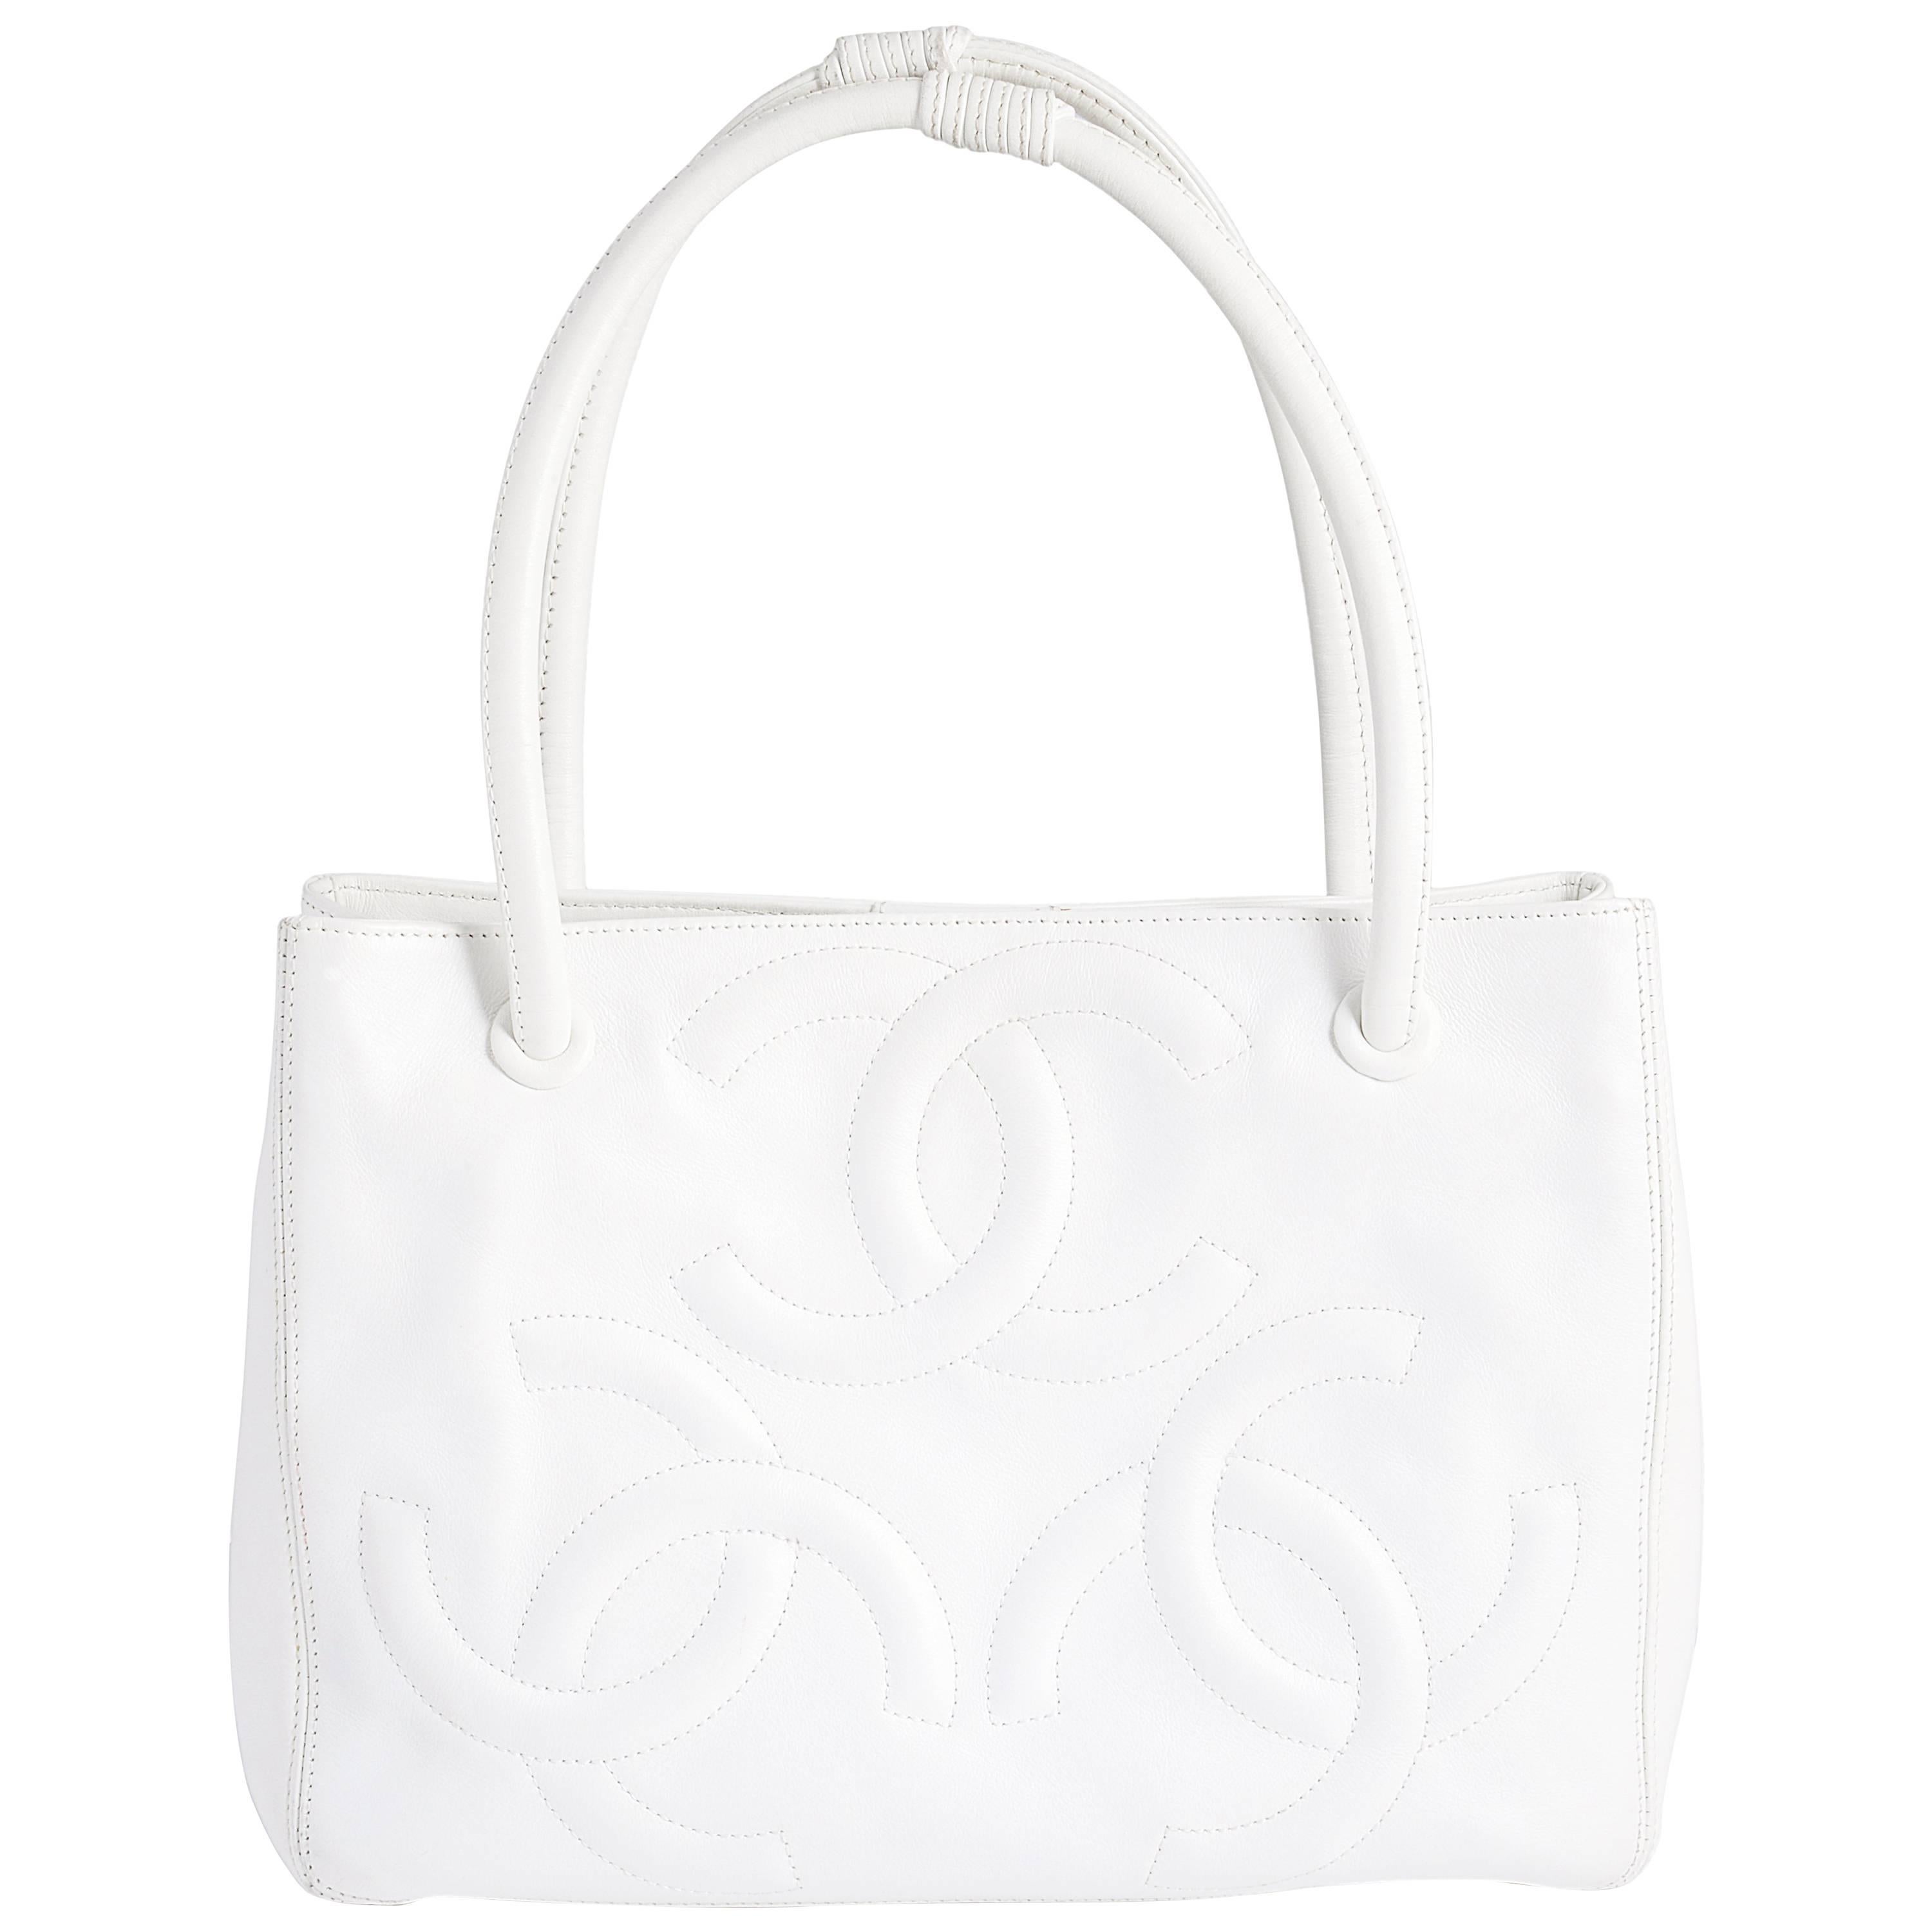 Chanel White Tote Bag 